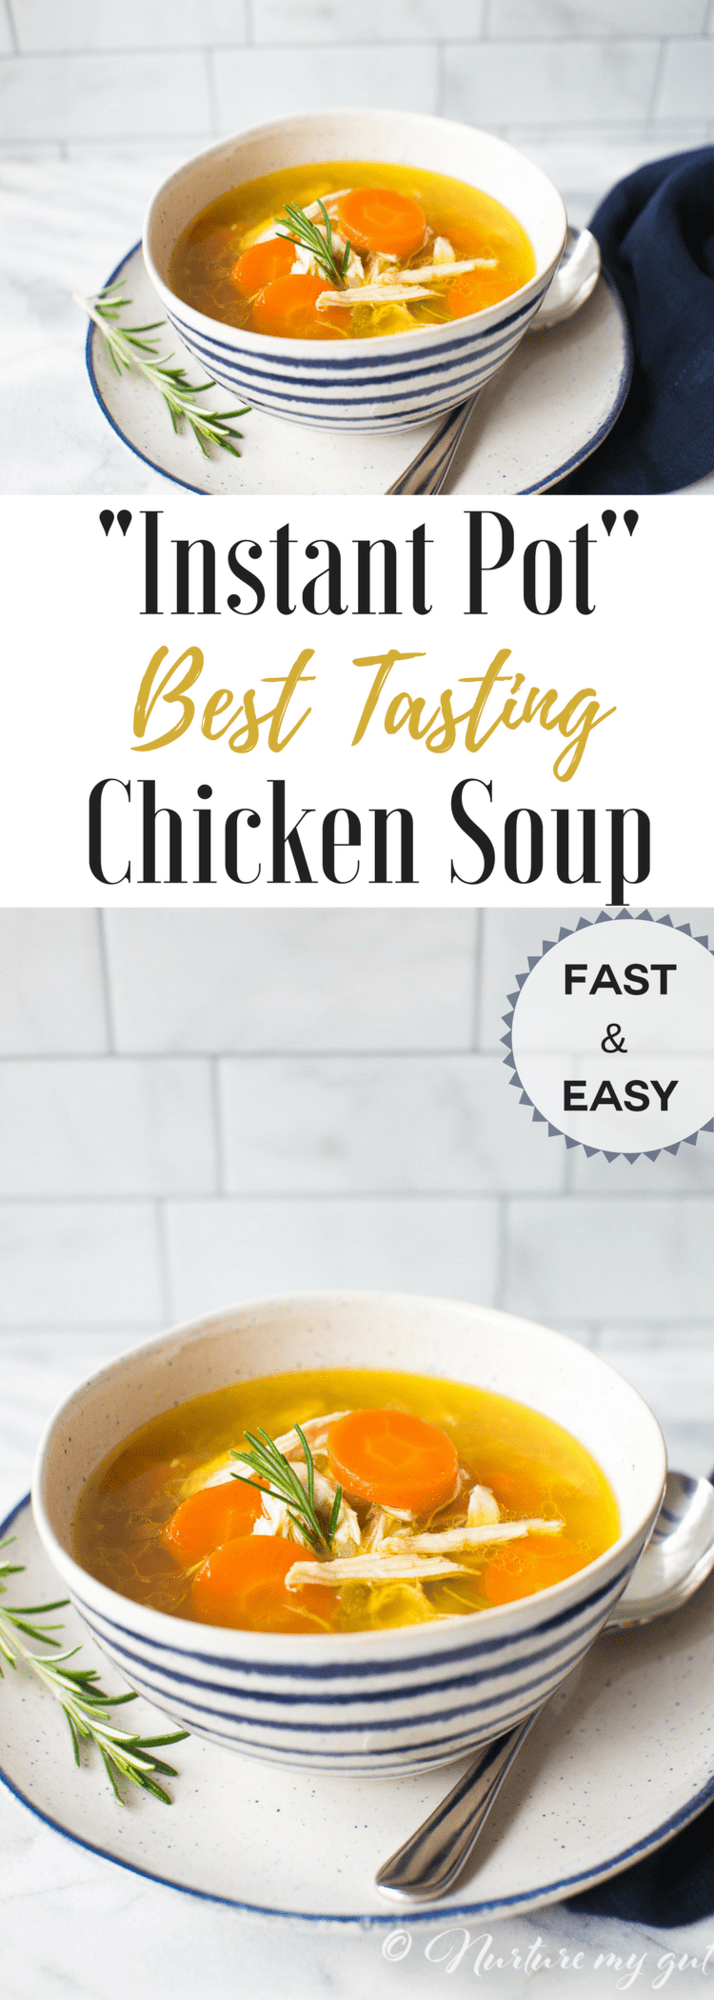 Instant Pot Best Tasting Chicken Soup